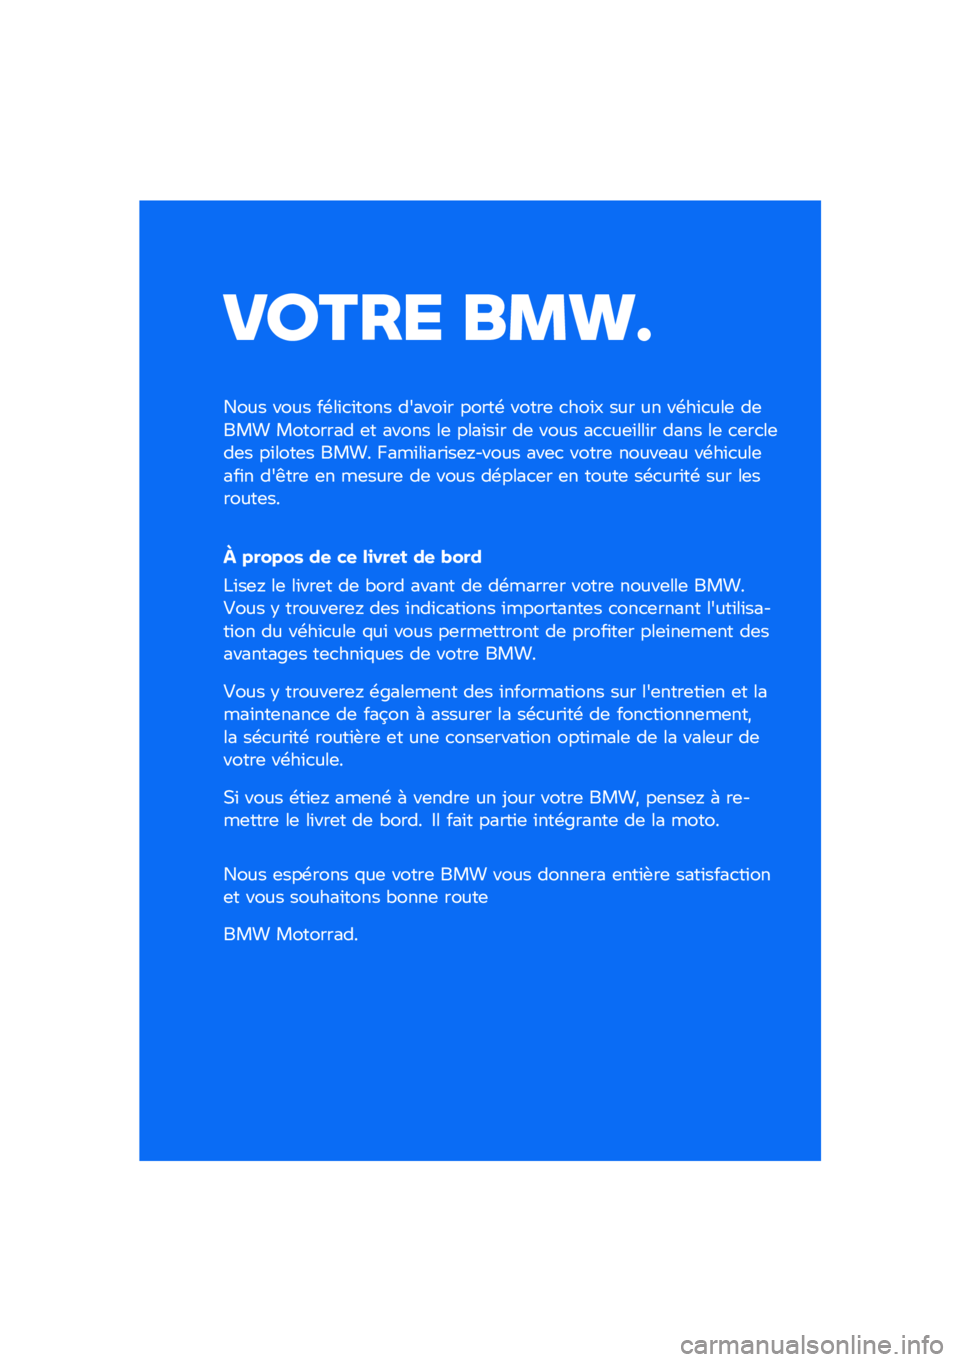 BMW MOTORRAD R NINE T 2020  Livret de bord (in French) ����� ��\b�	�

���� ���� ��\b��\f�
�\f���� ������\f� �����\b �����	 �
���\f� ��� �� ��\b��\f�
���	 ��	��� �������� �	� ����� ��	 ���